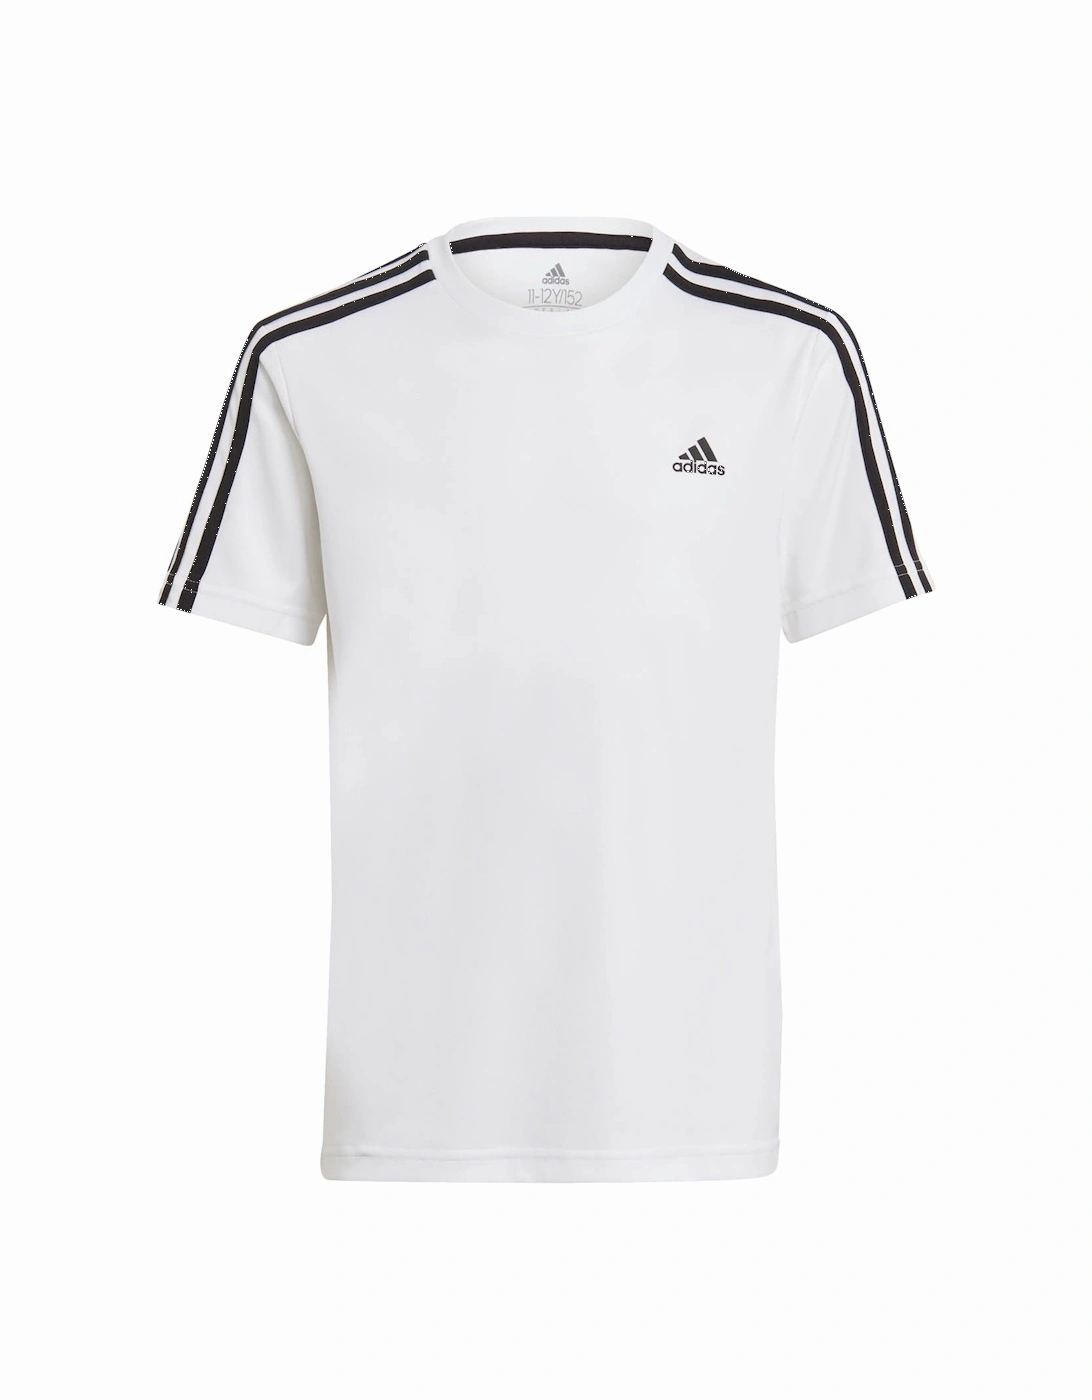 Juniors 3 Stripe T-Shirt And Short Set (White/Black)